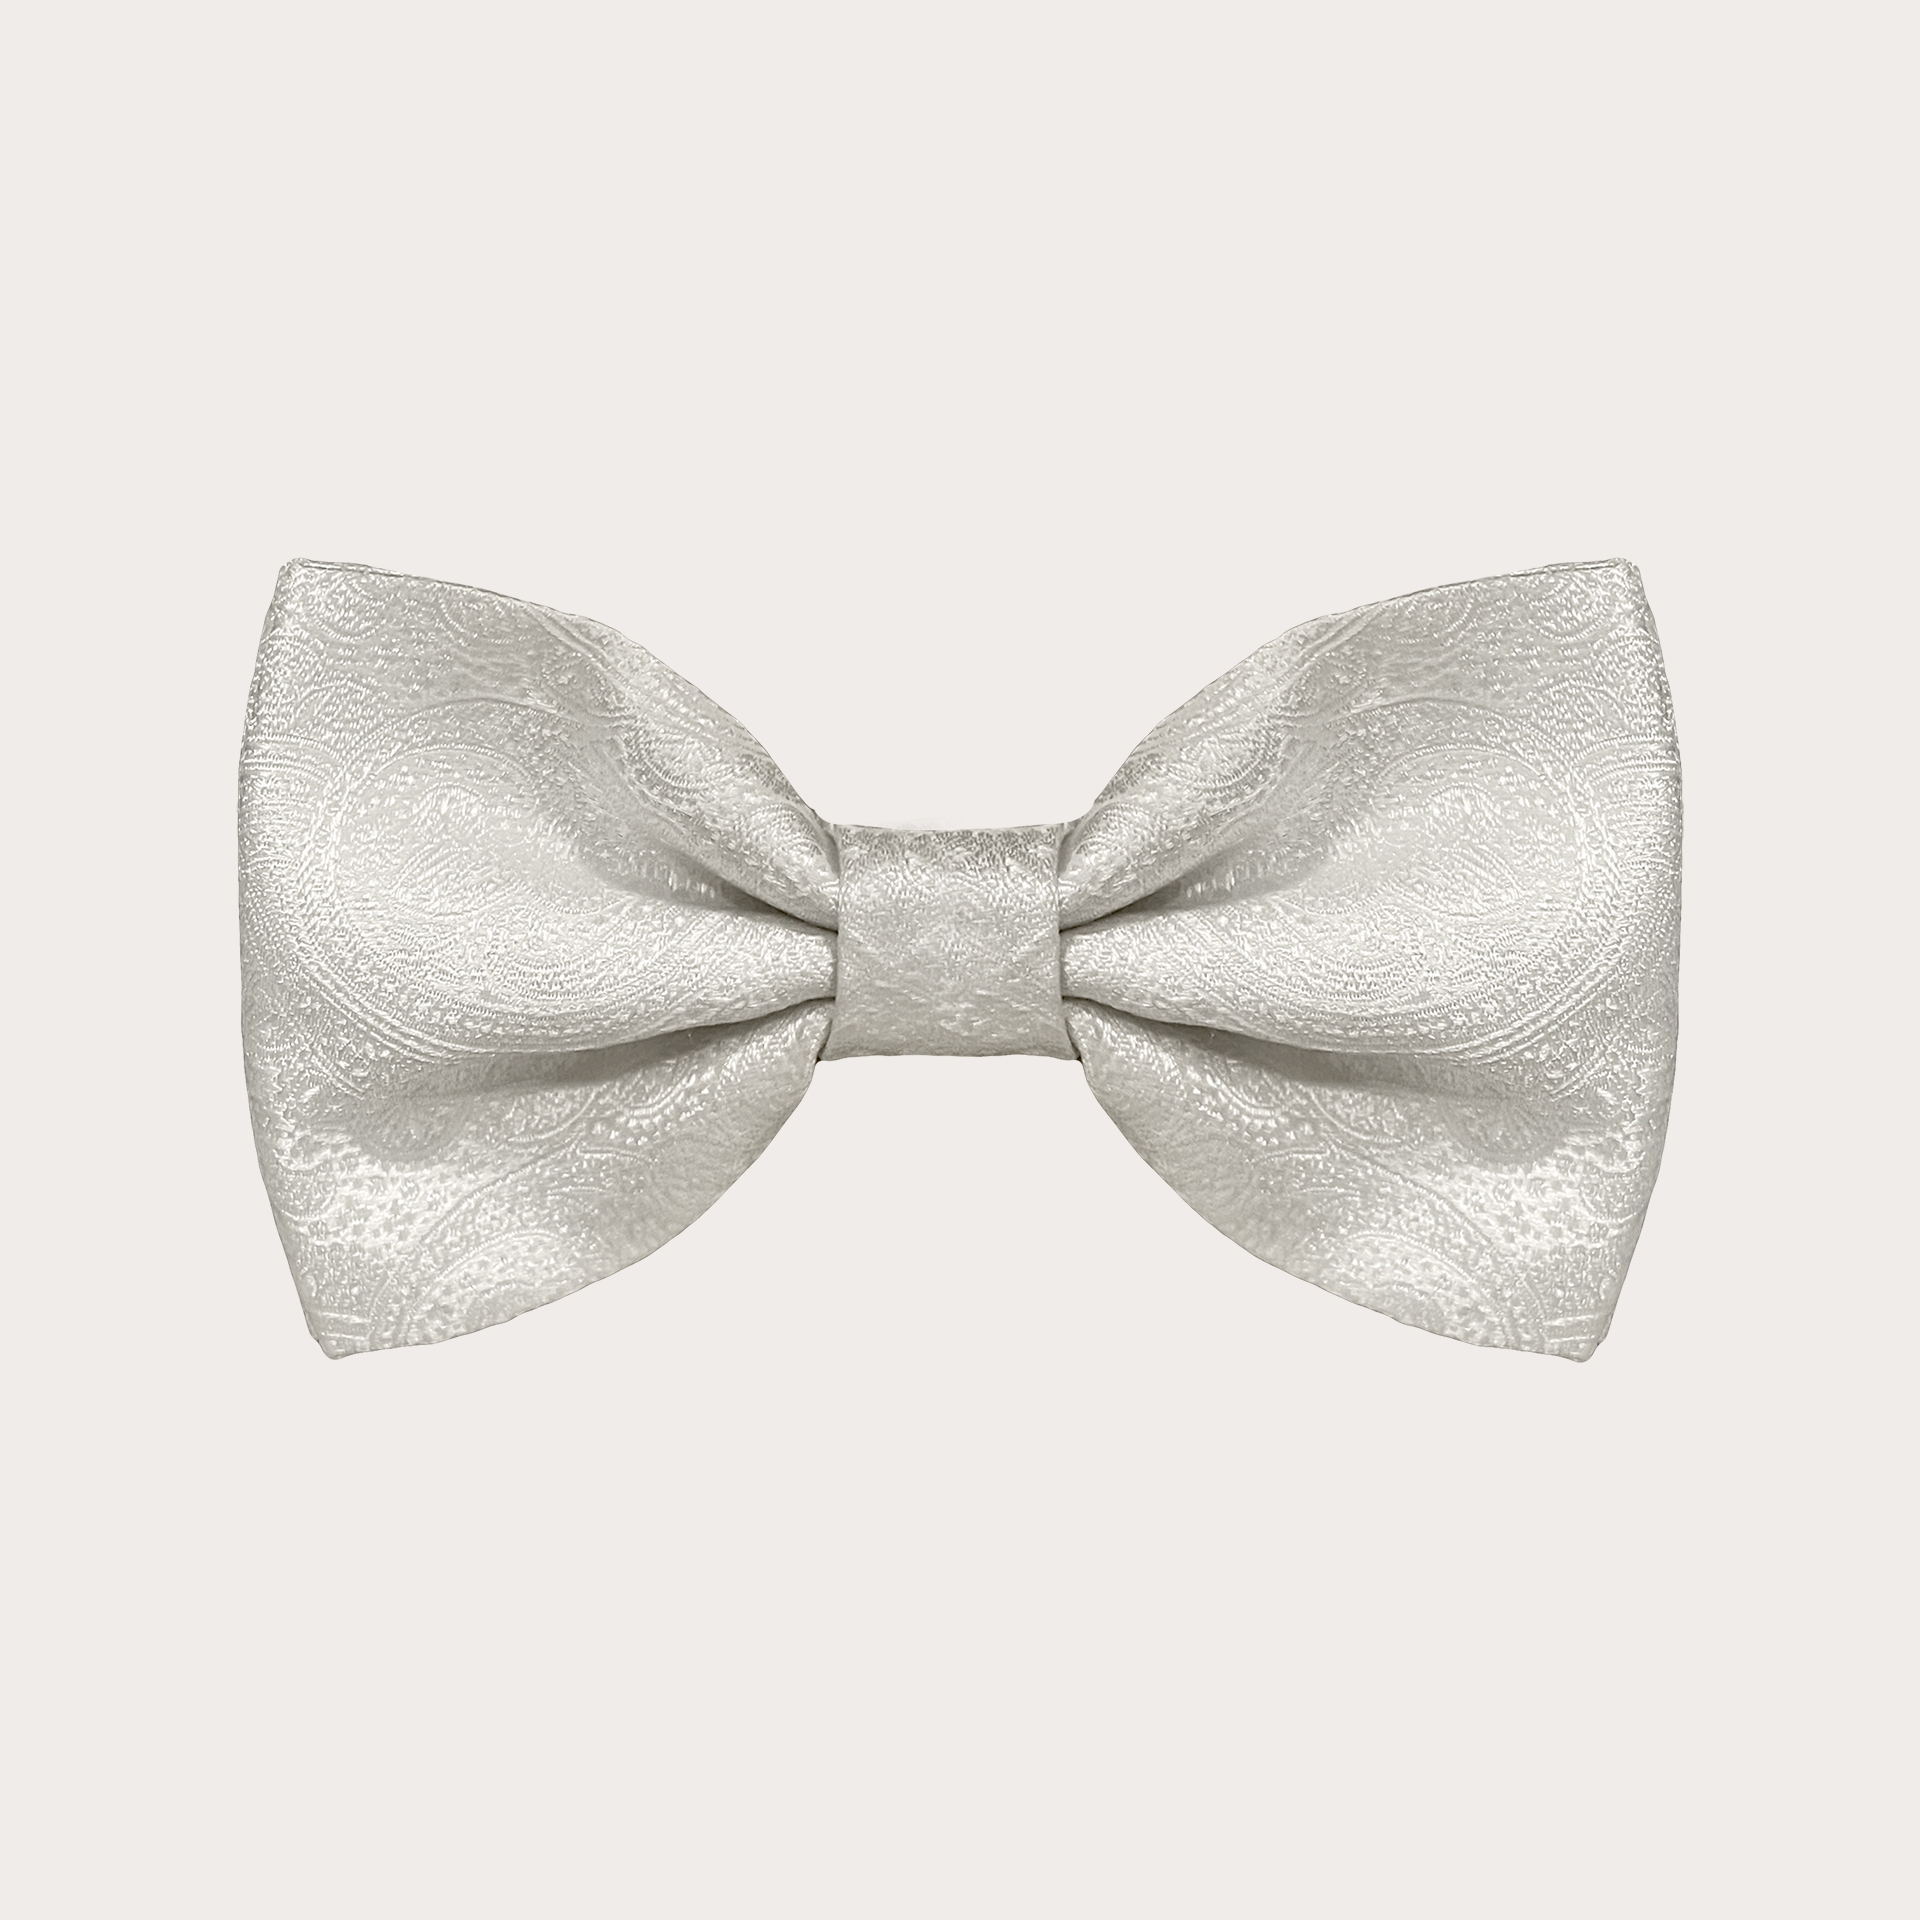 White bow tie in jacquard silk